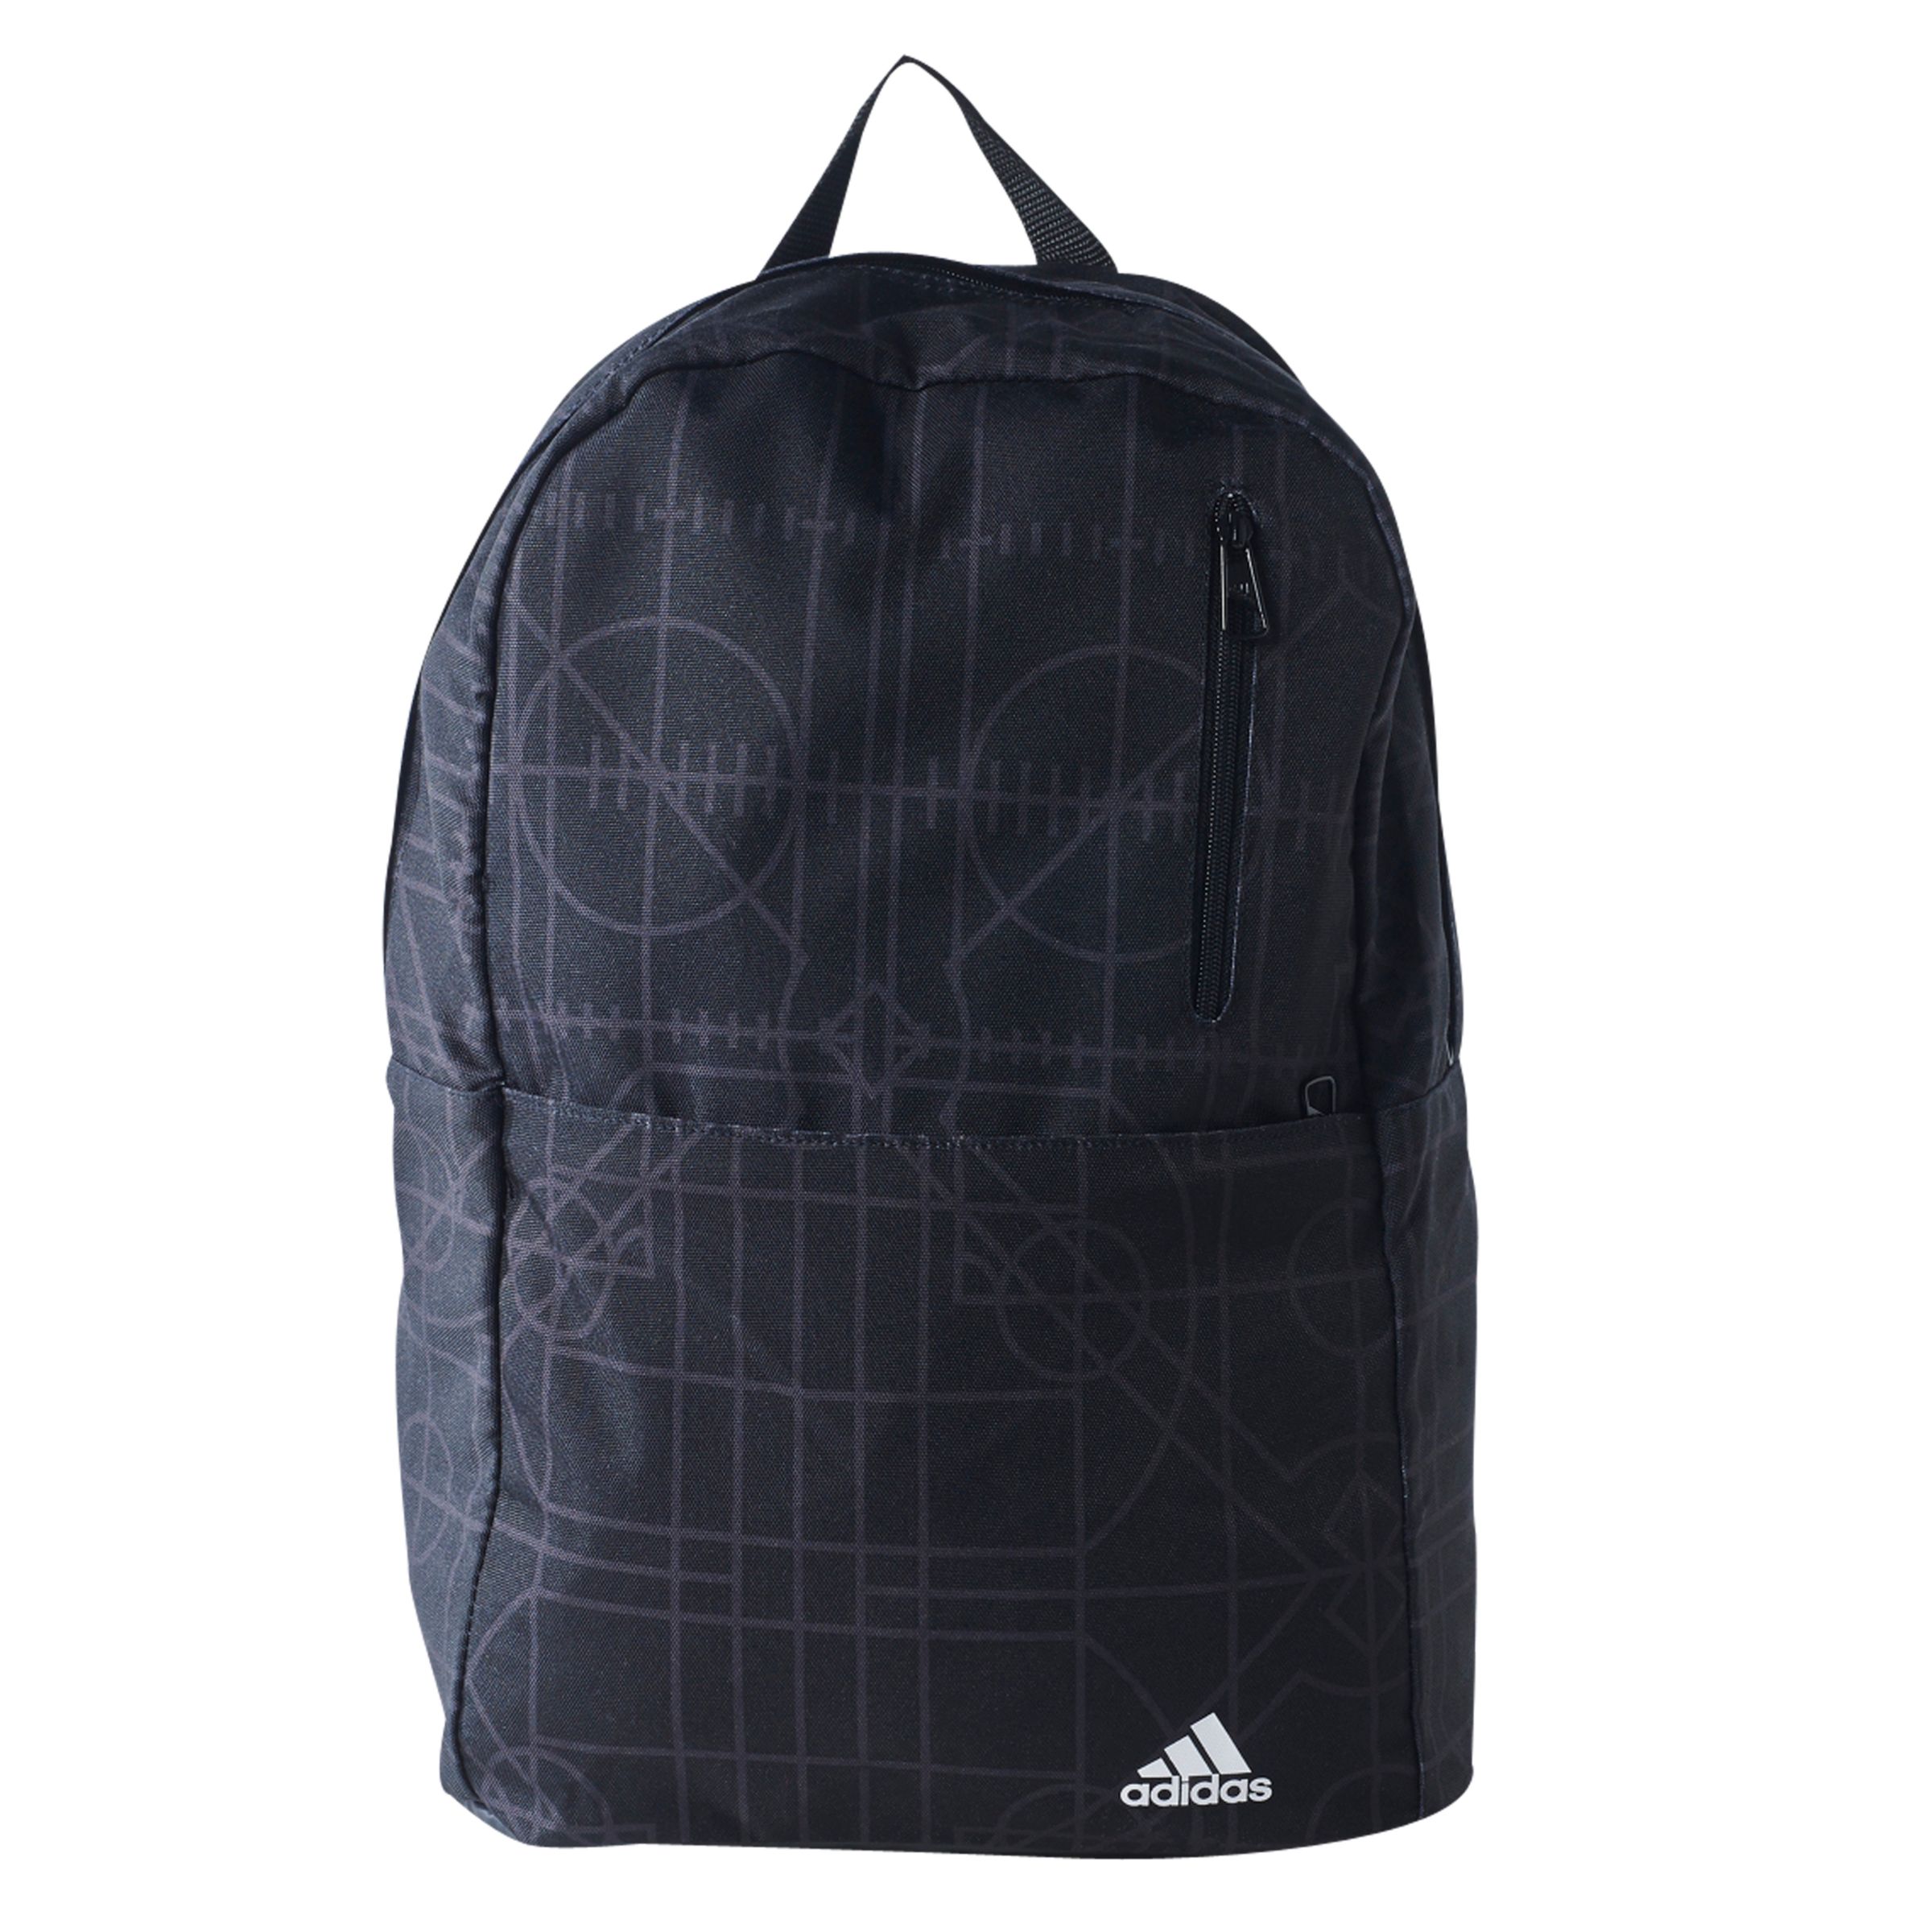 adidas versatile backpack